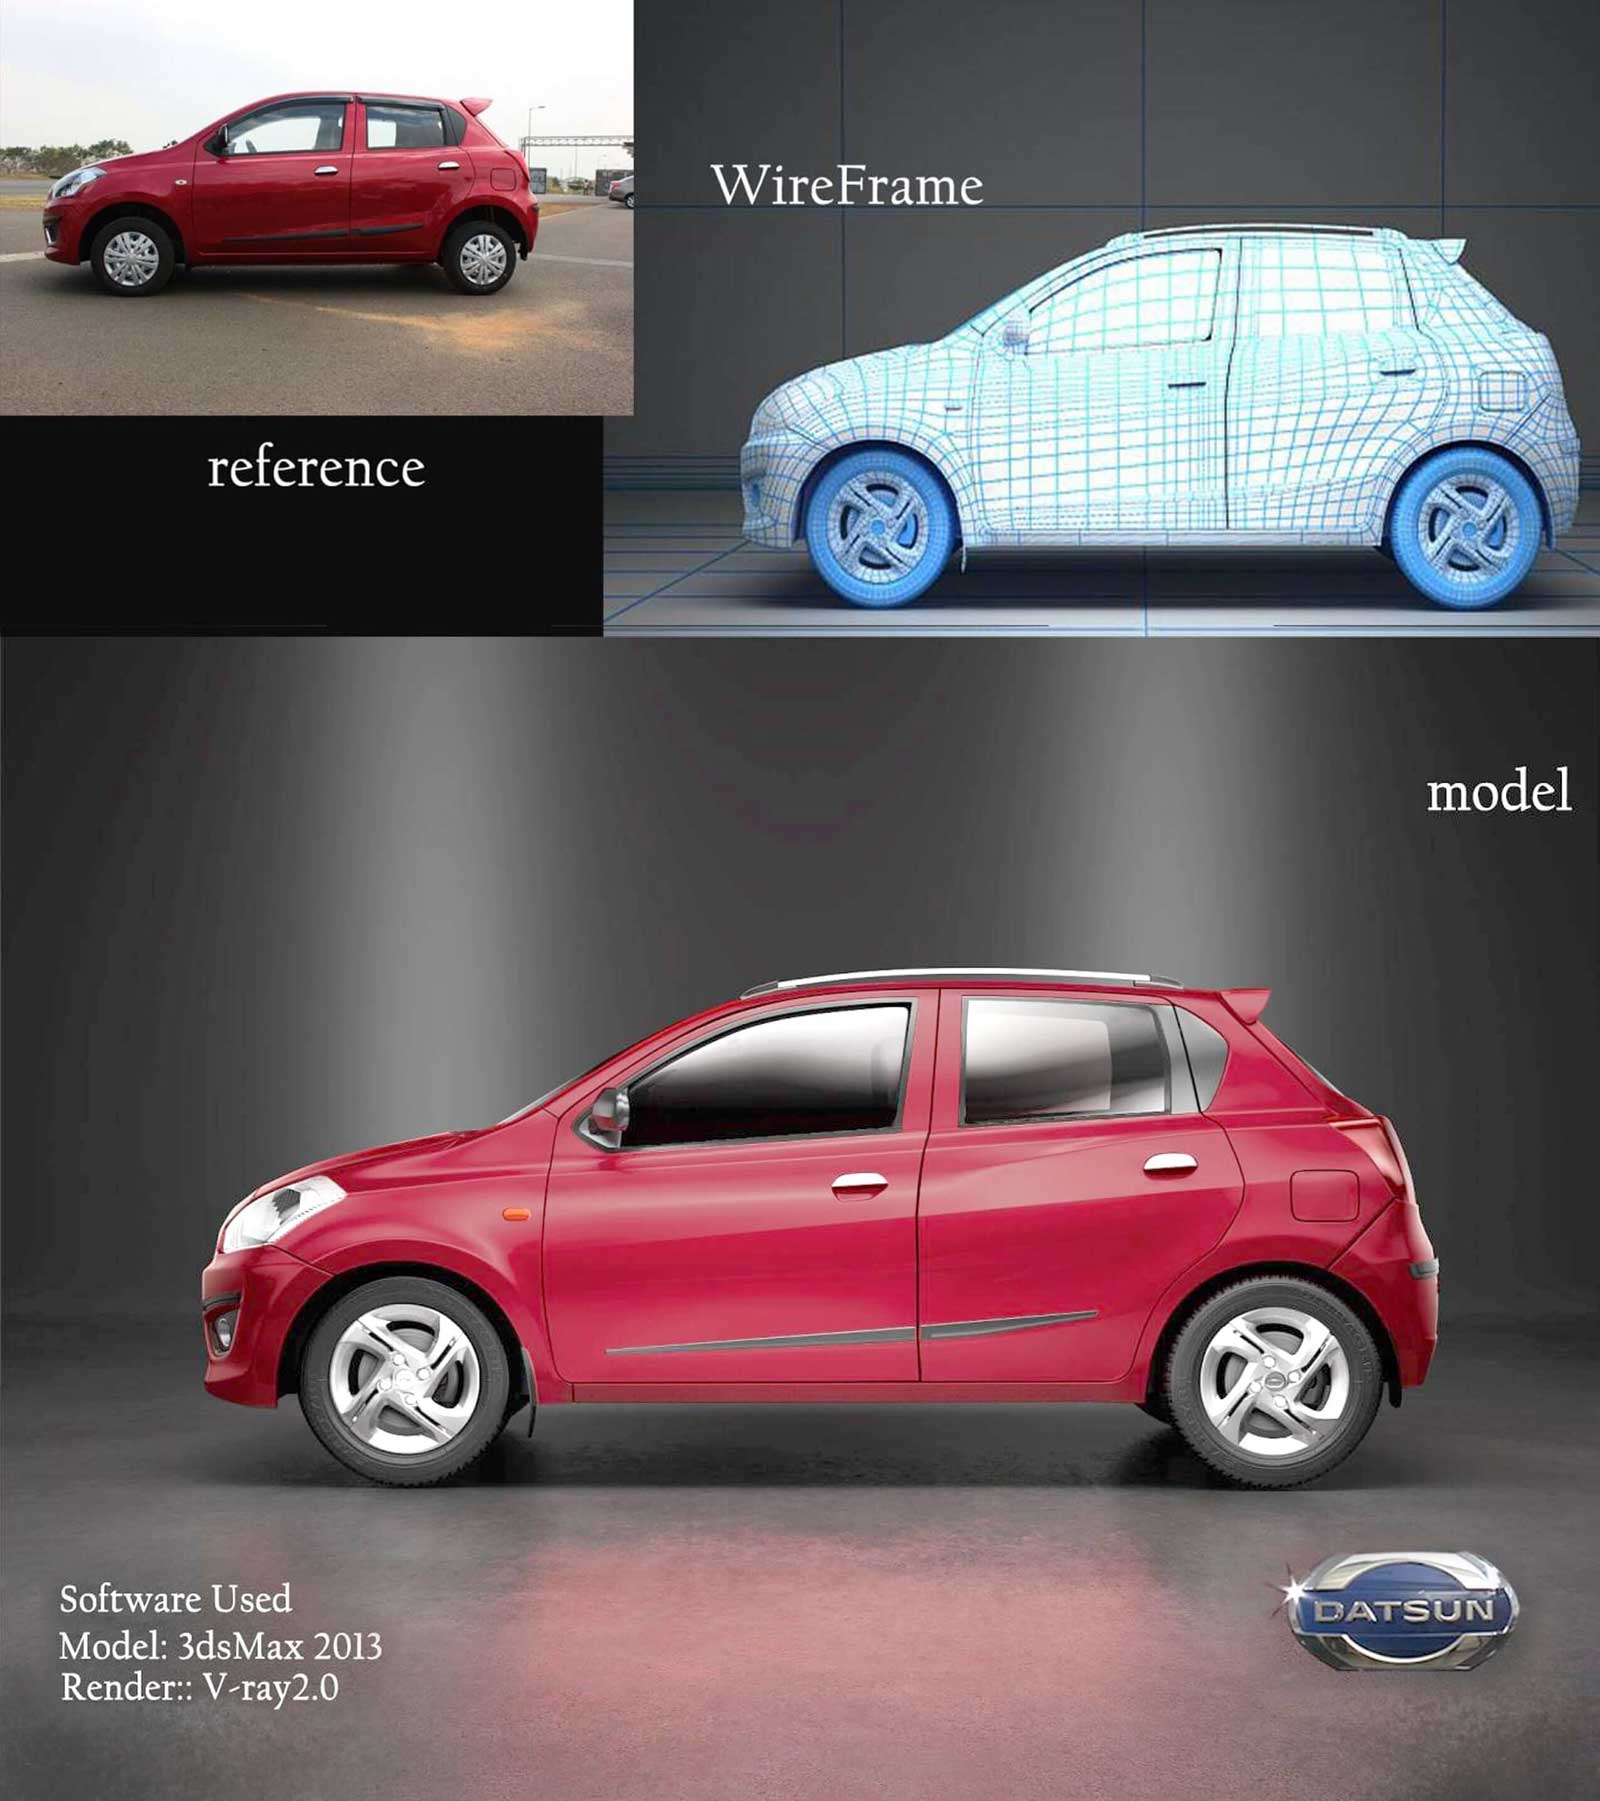 Datsun - Wireframe & CAR Model Design